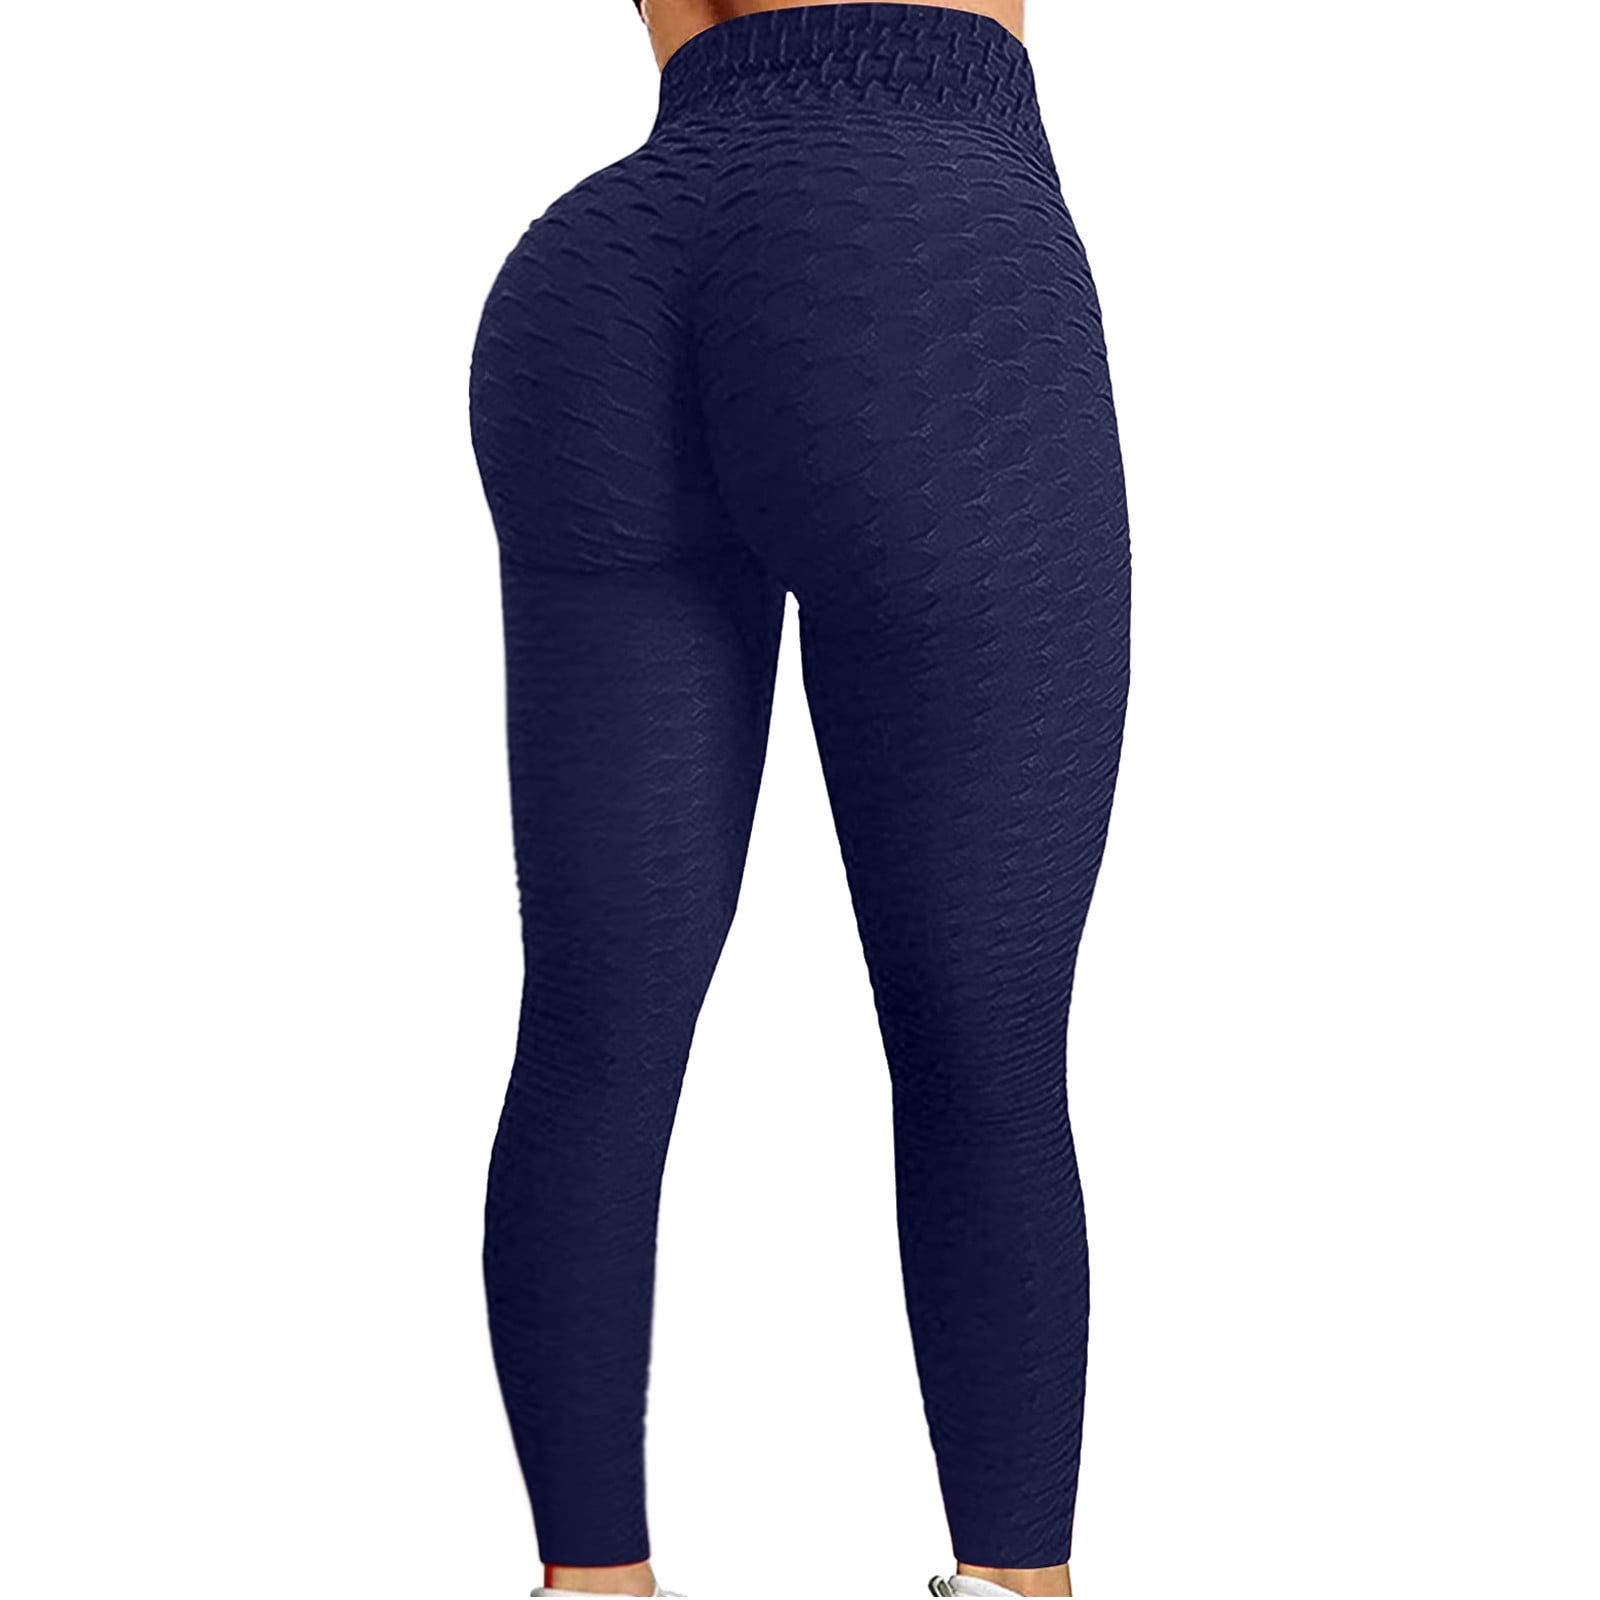 Hfyihgf High Waisted Leggings for Women Workout Mesh Leggings Butt Lifting  Yoga Pants Gym Sports Tummy Control Tights(Dark Blue,XL) 